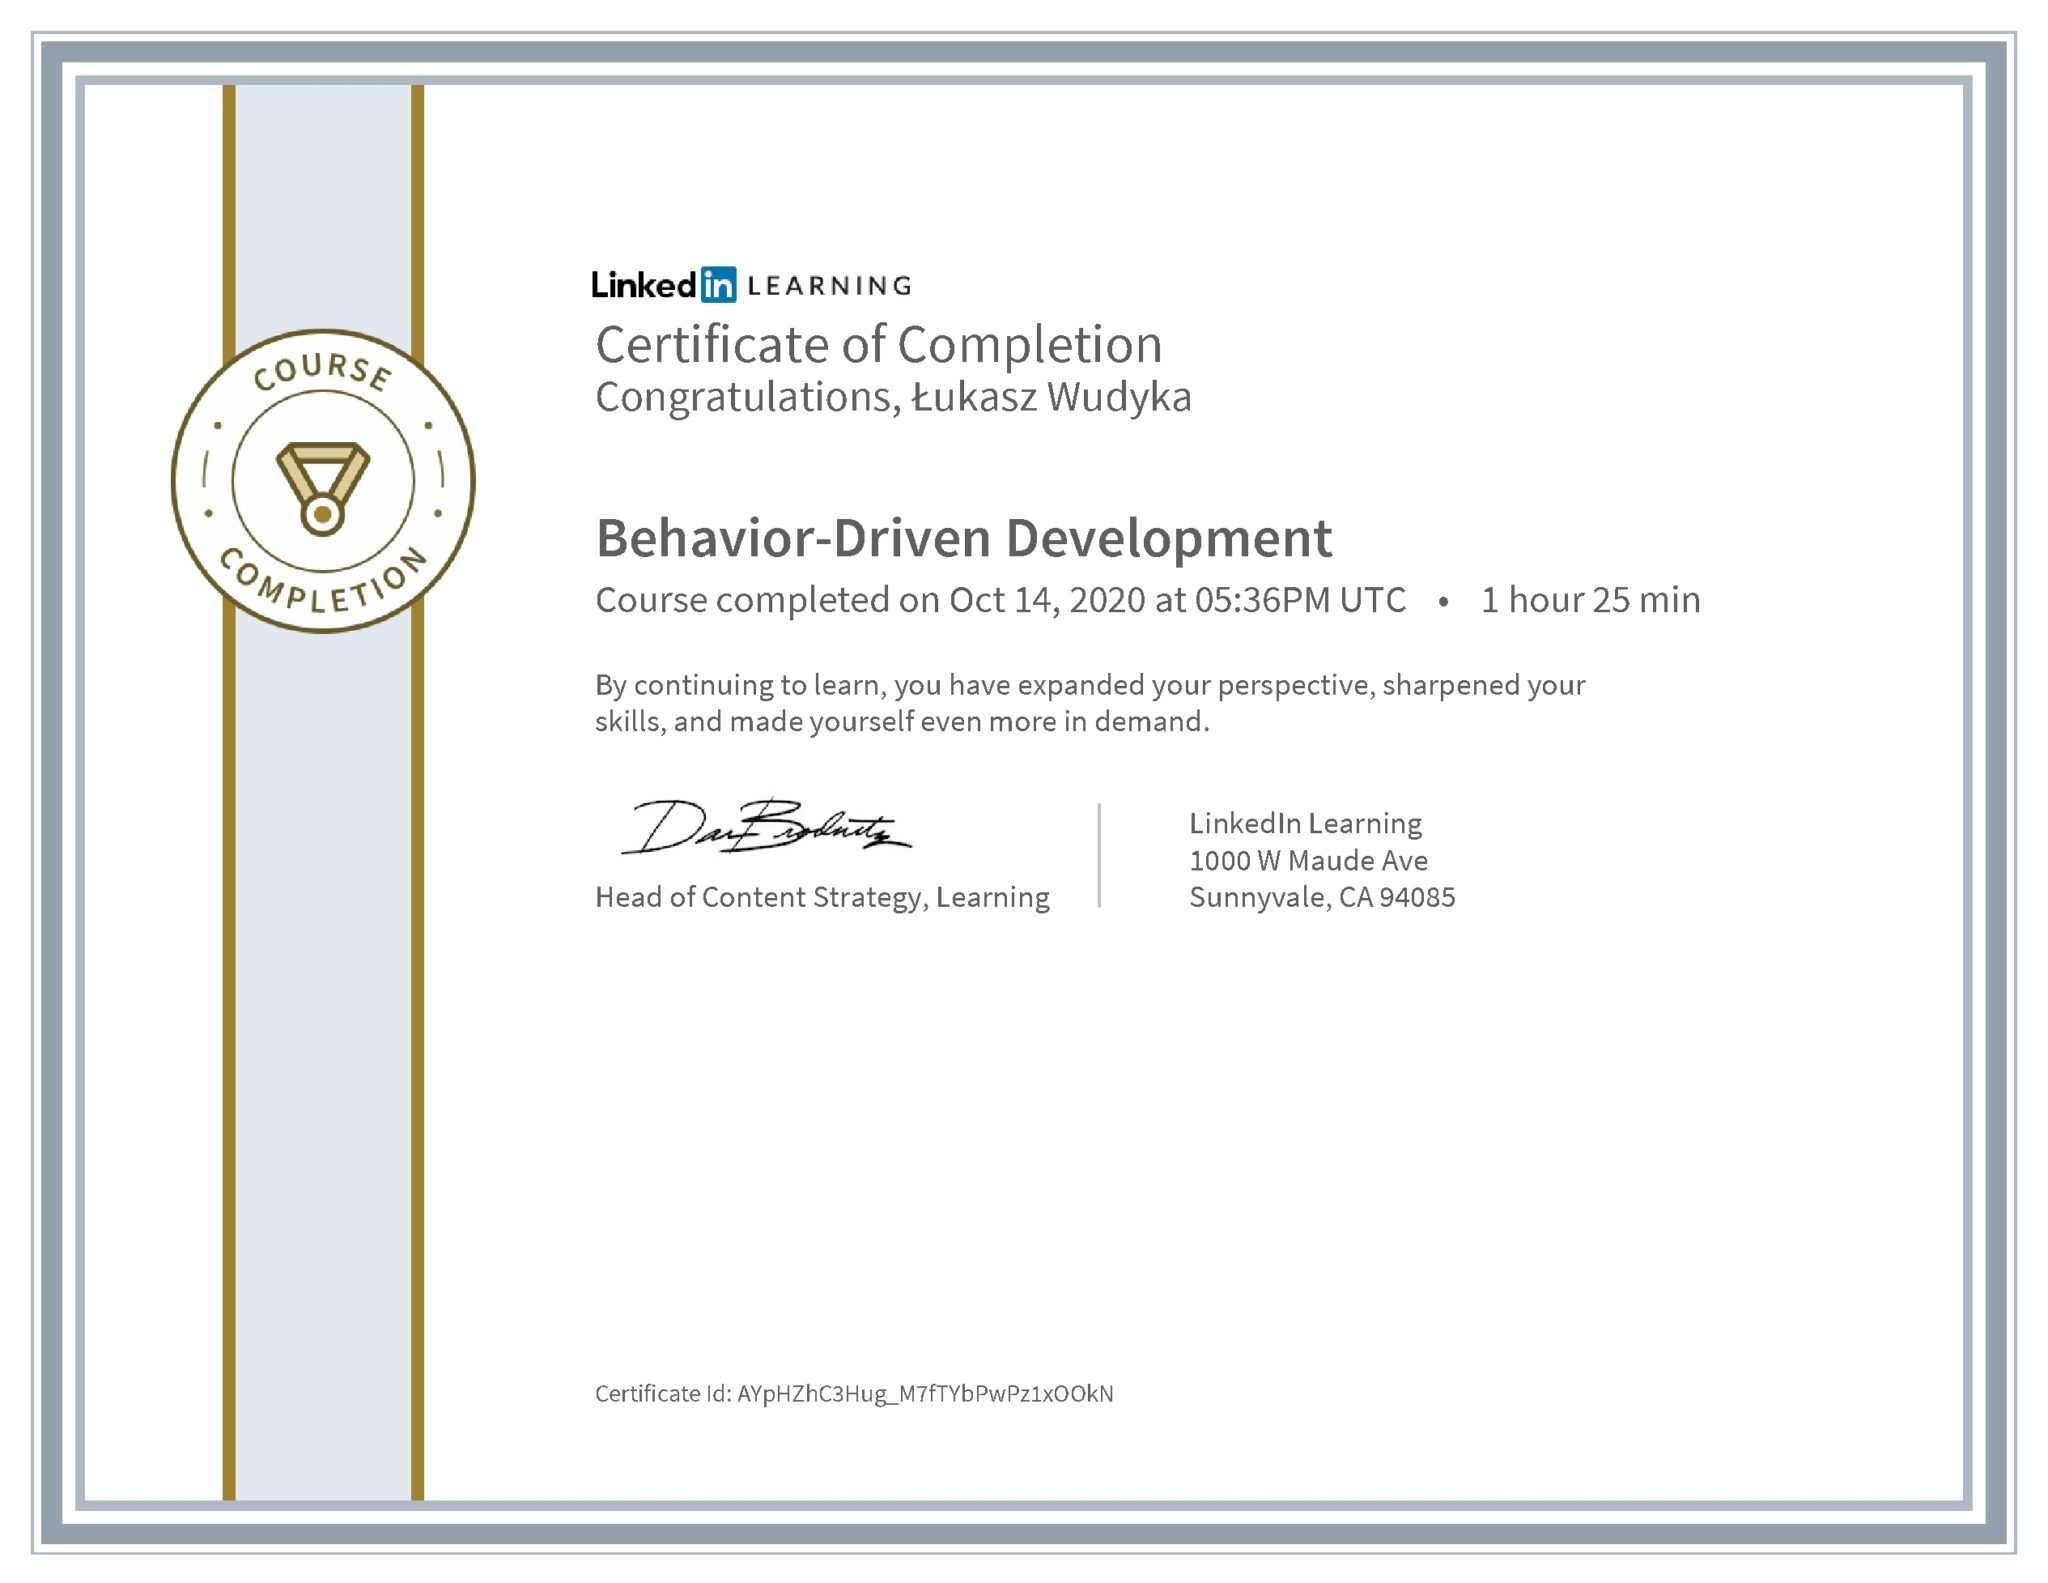 Łukasz Wudyka certyfikat LinkedIn Behavior-Driven Development